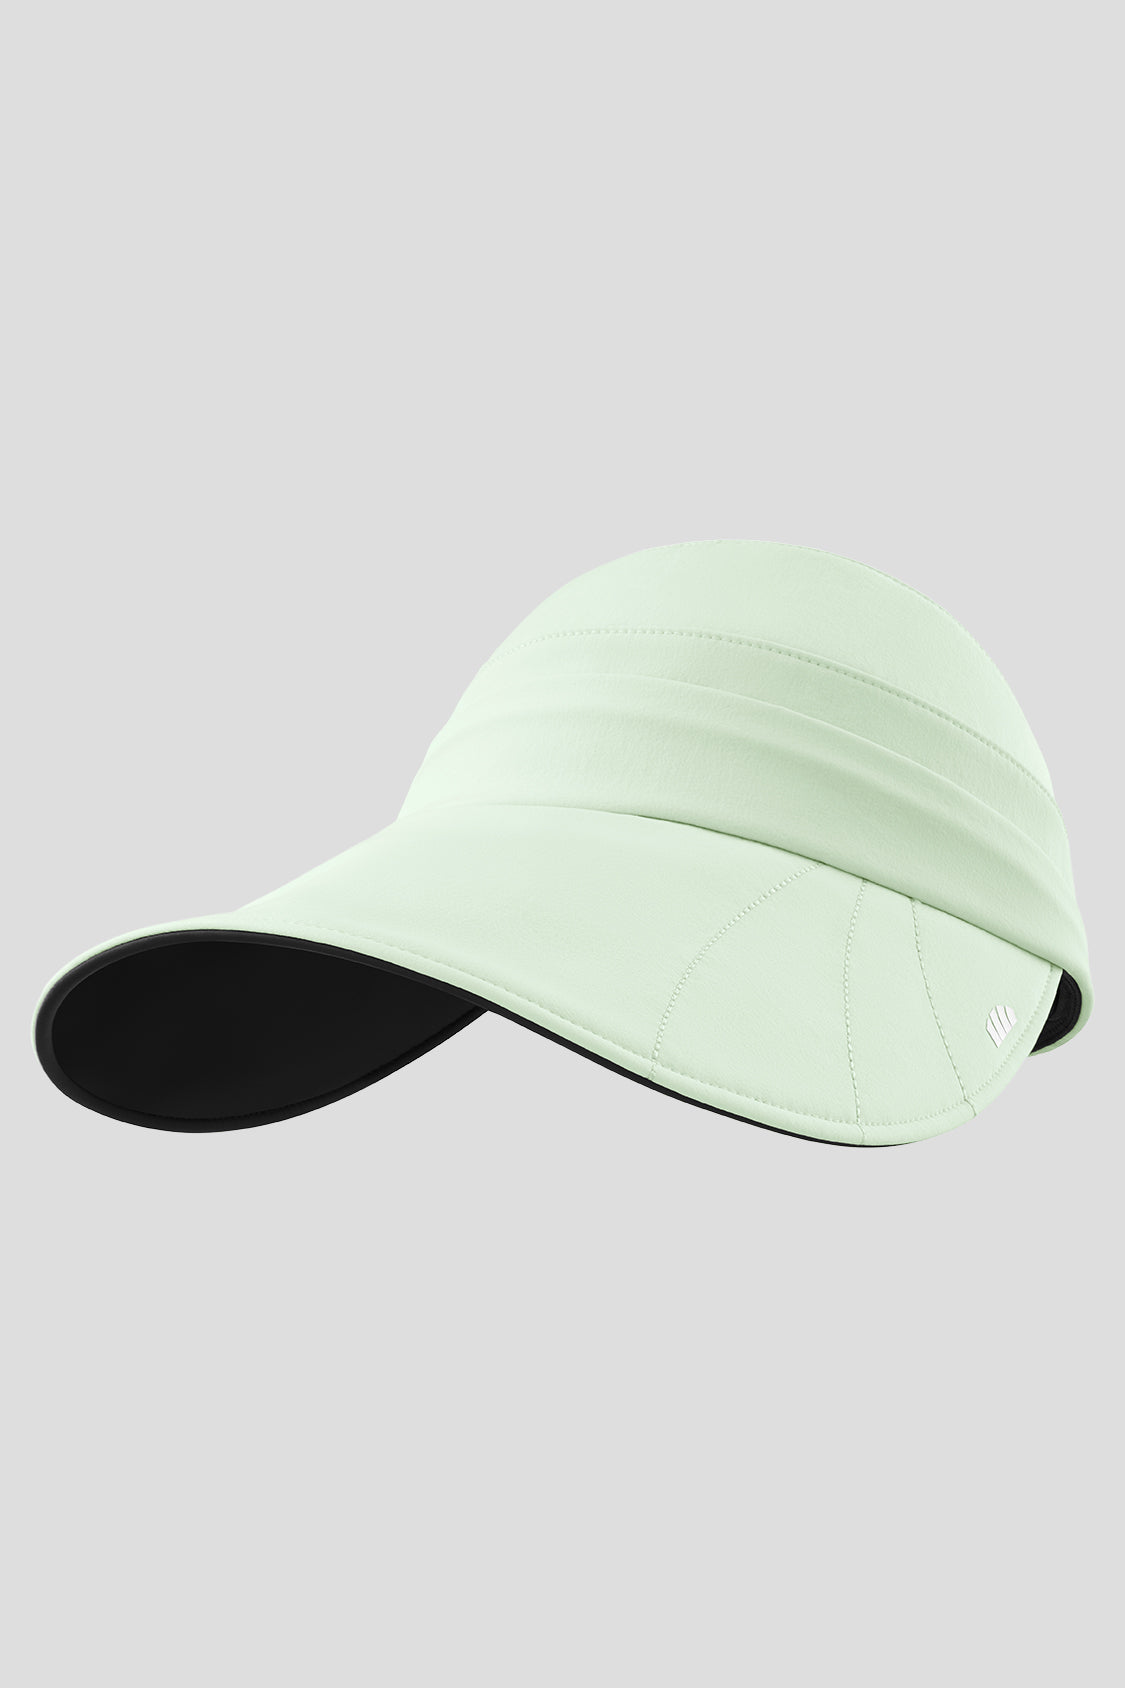 beneudner women's sun hats upf50+ #color_clear mist green